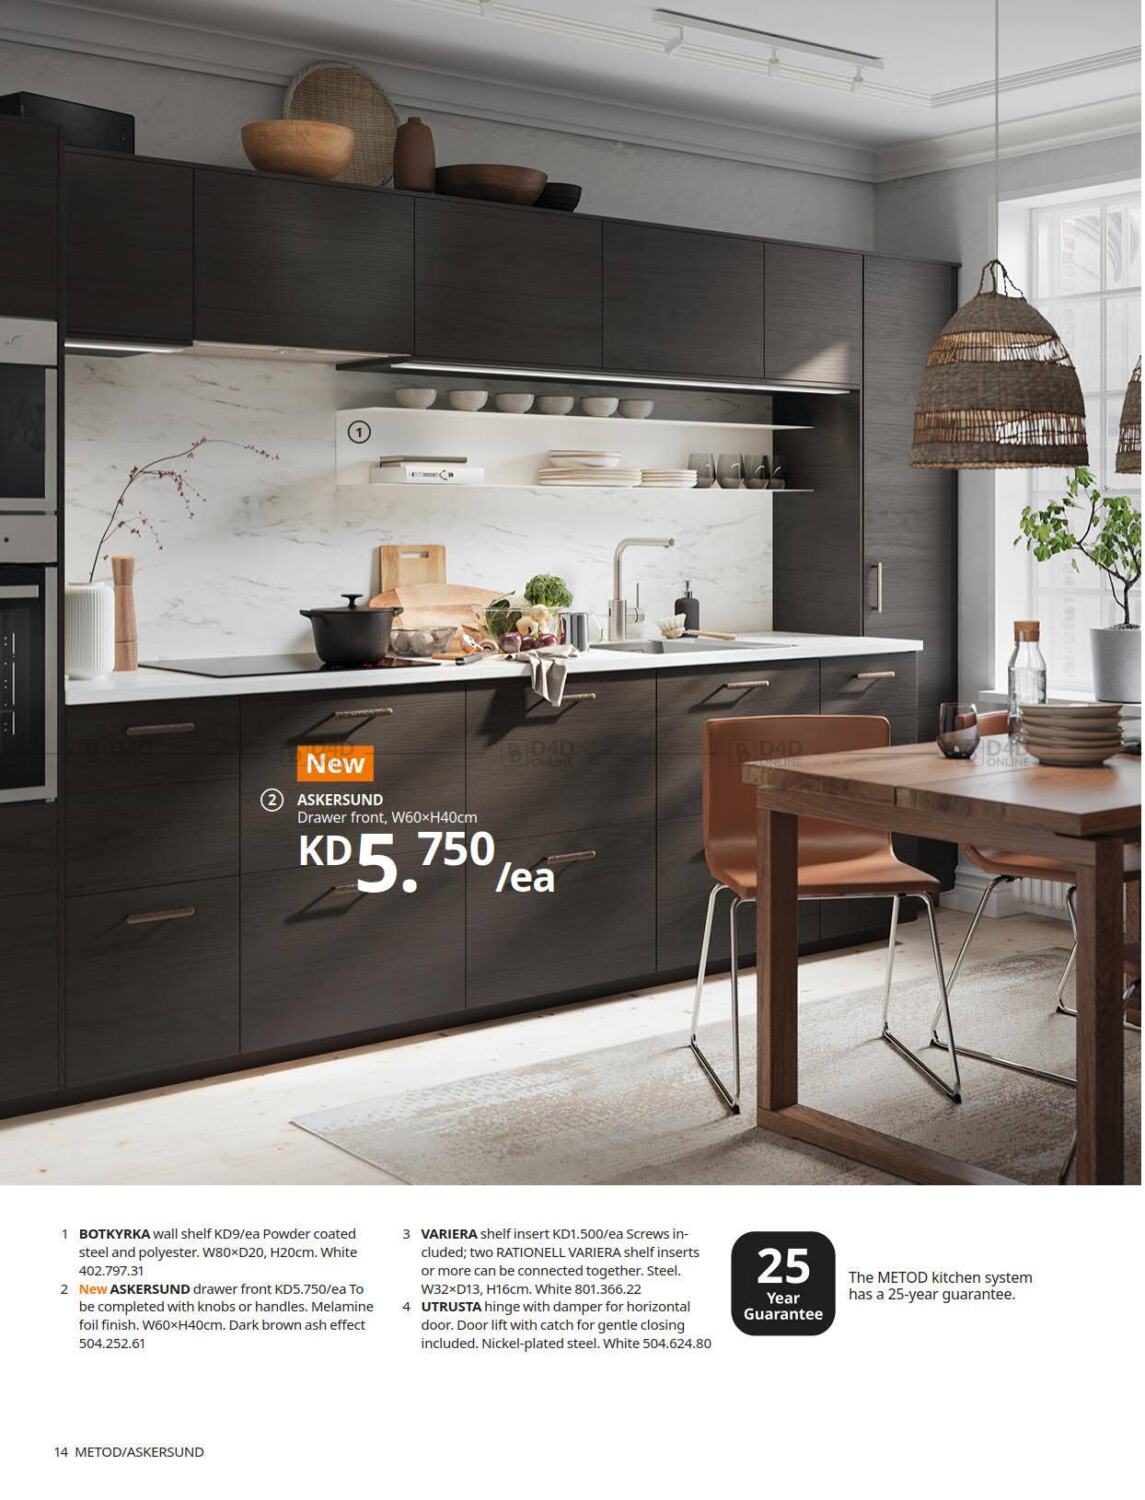 IKEA Kitchens Catalogue 2021 in Kuwait. Kitchens Catalogue 2021